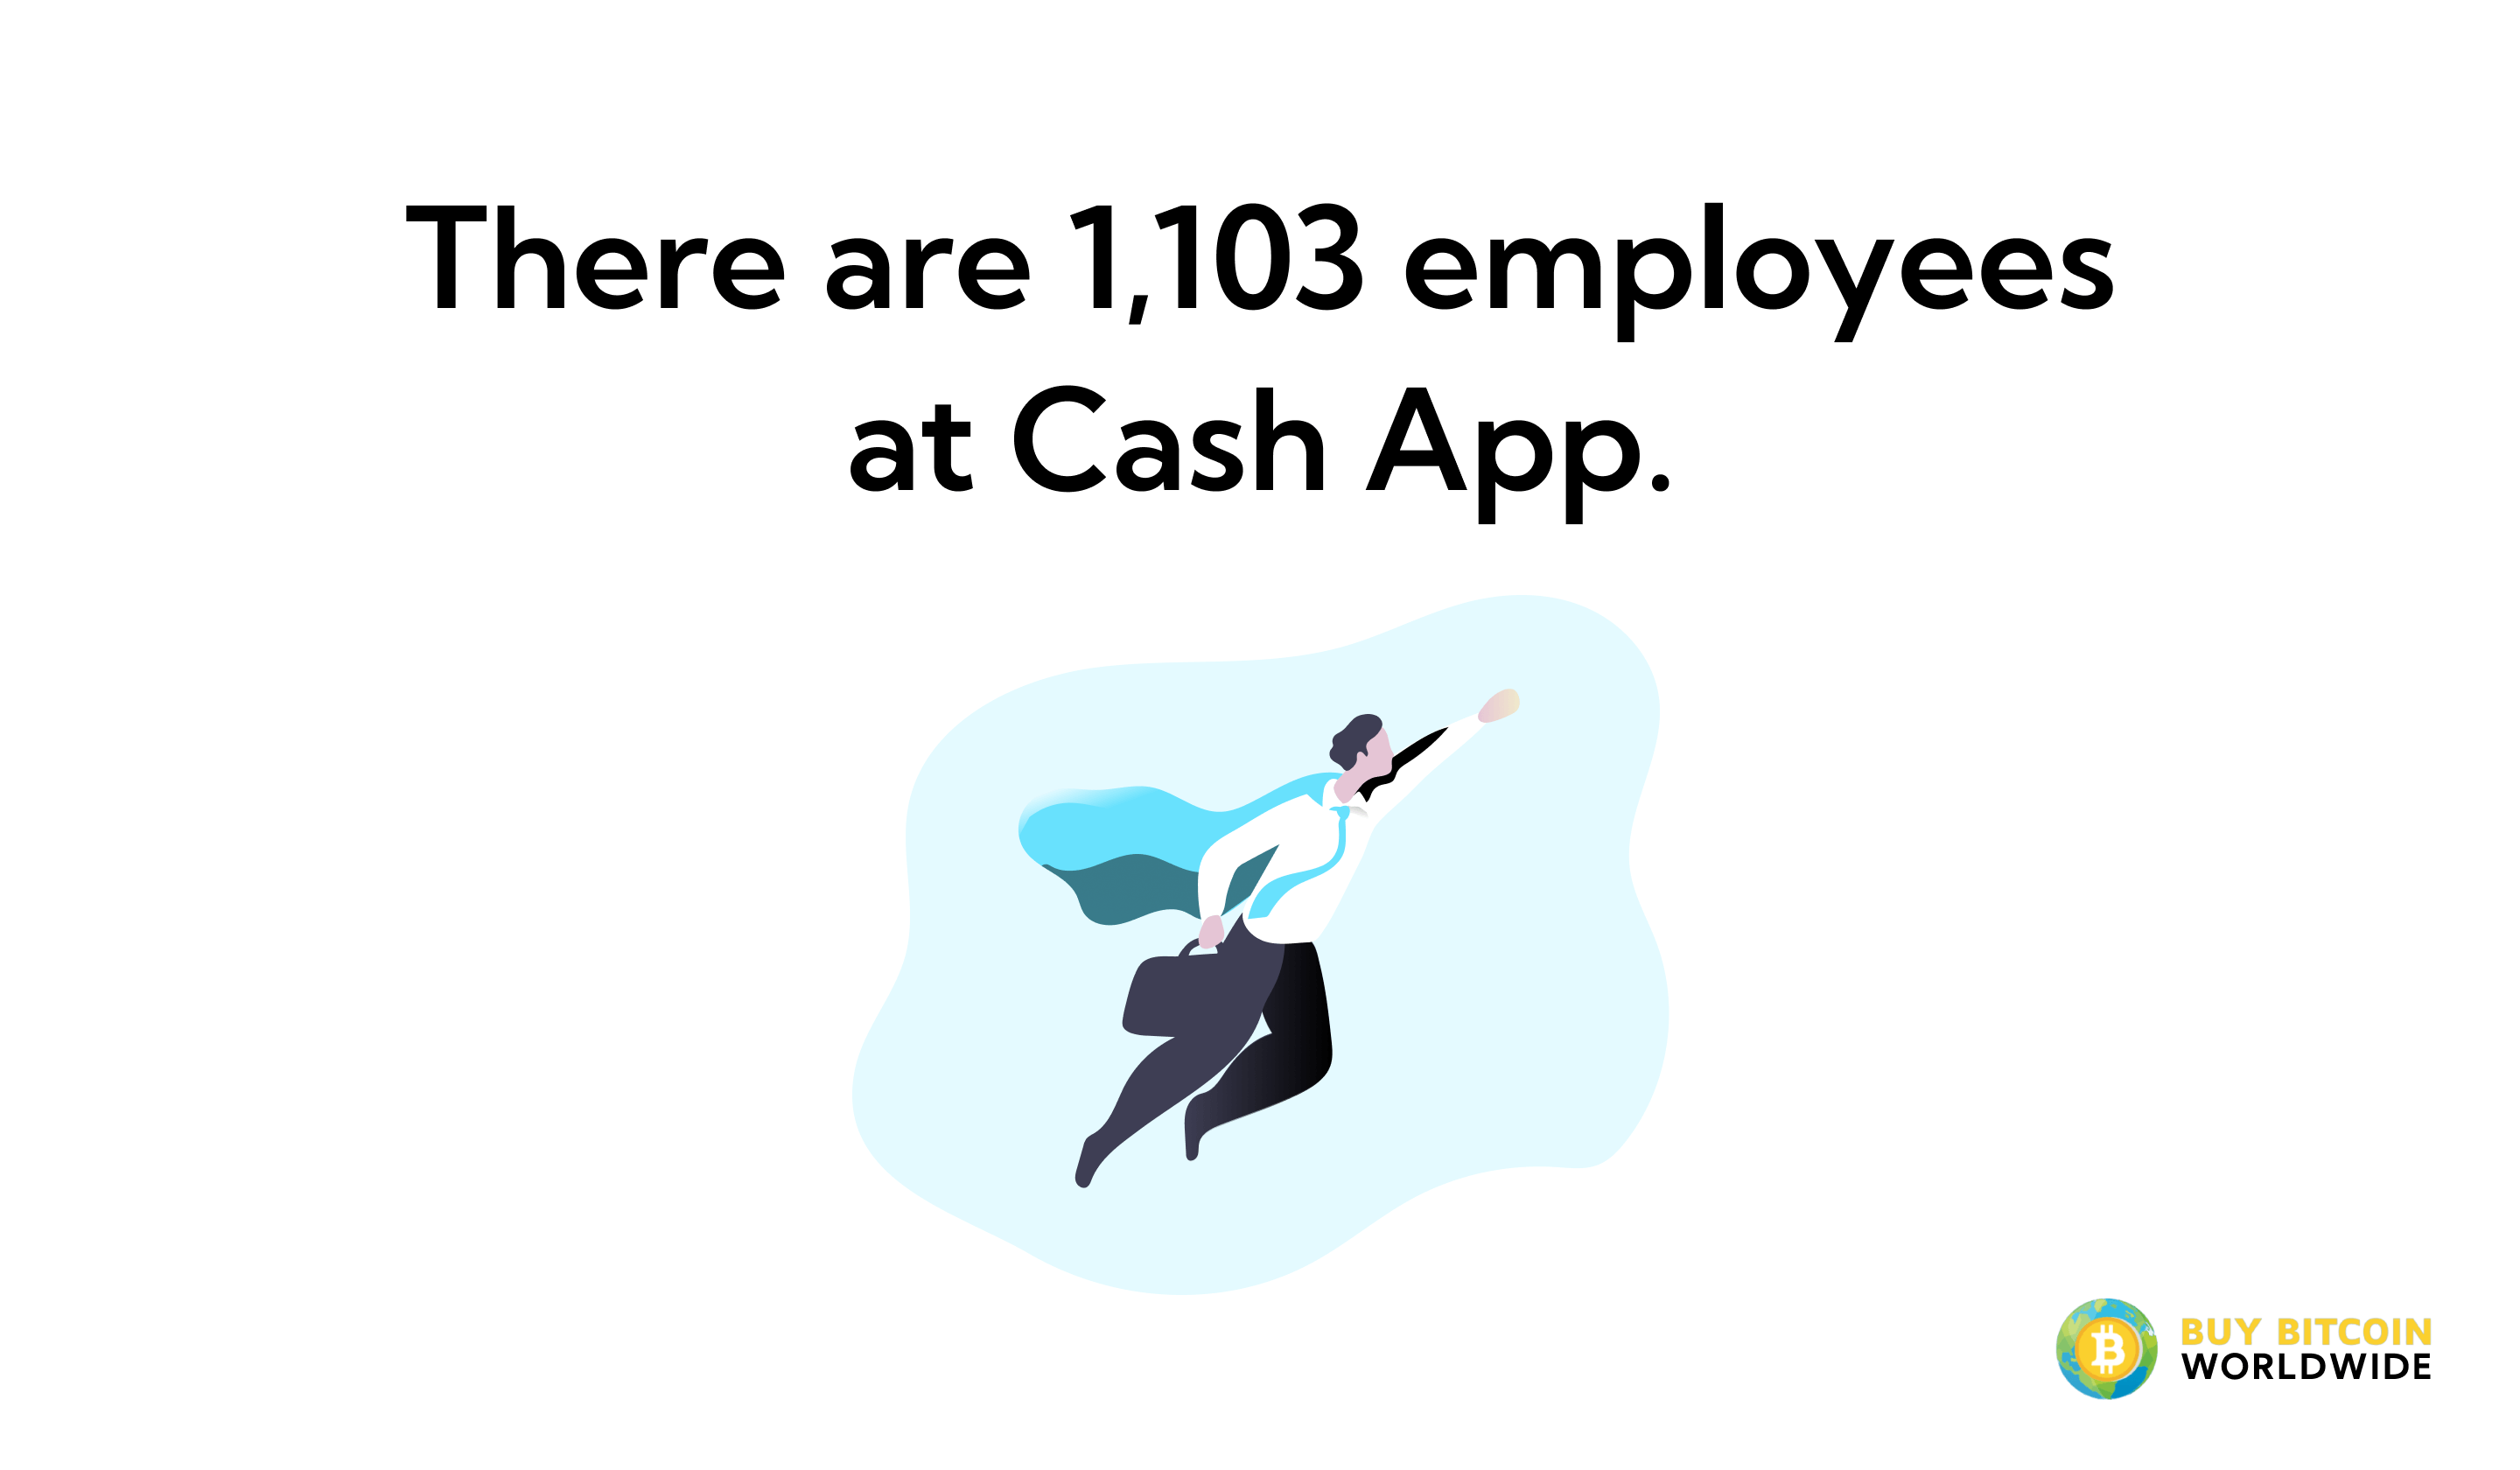 cash app has 1,103 employees